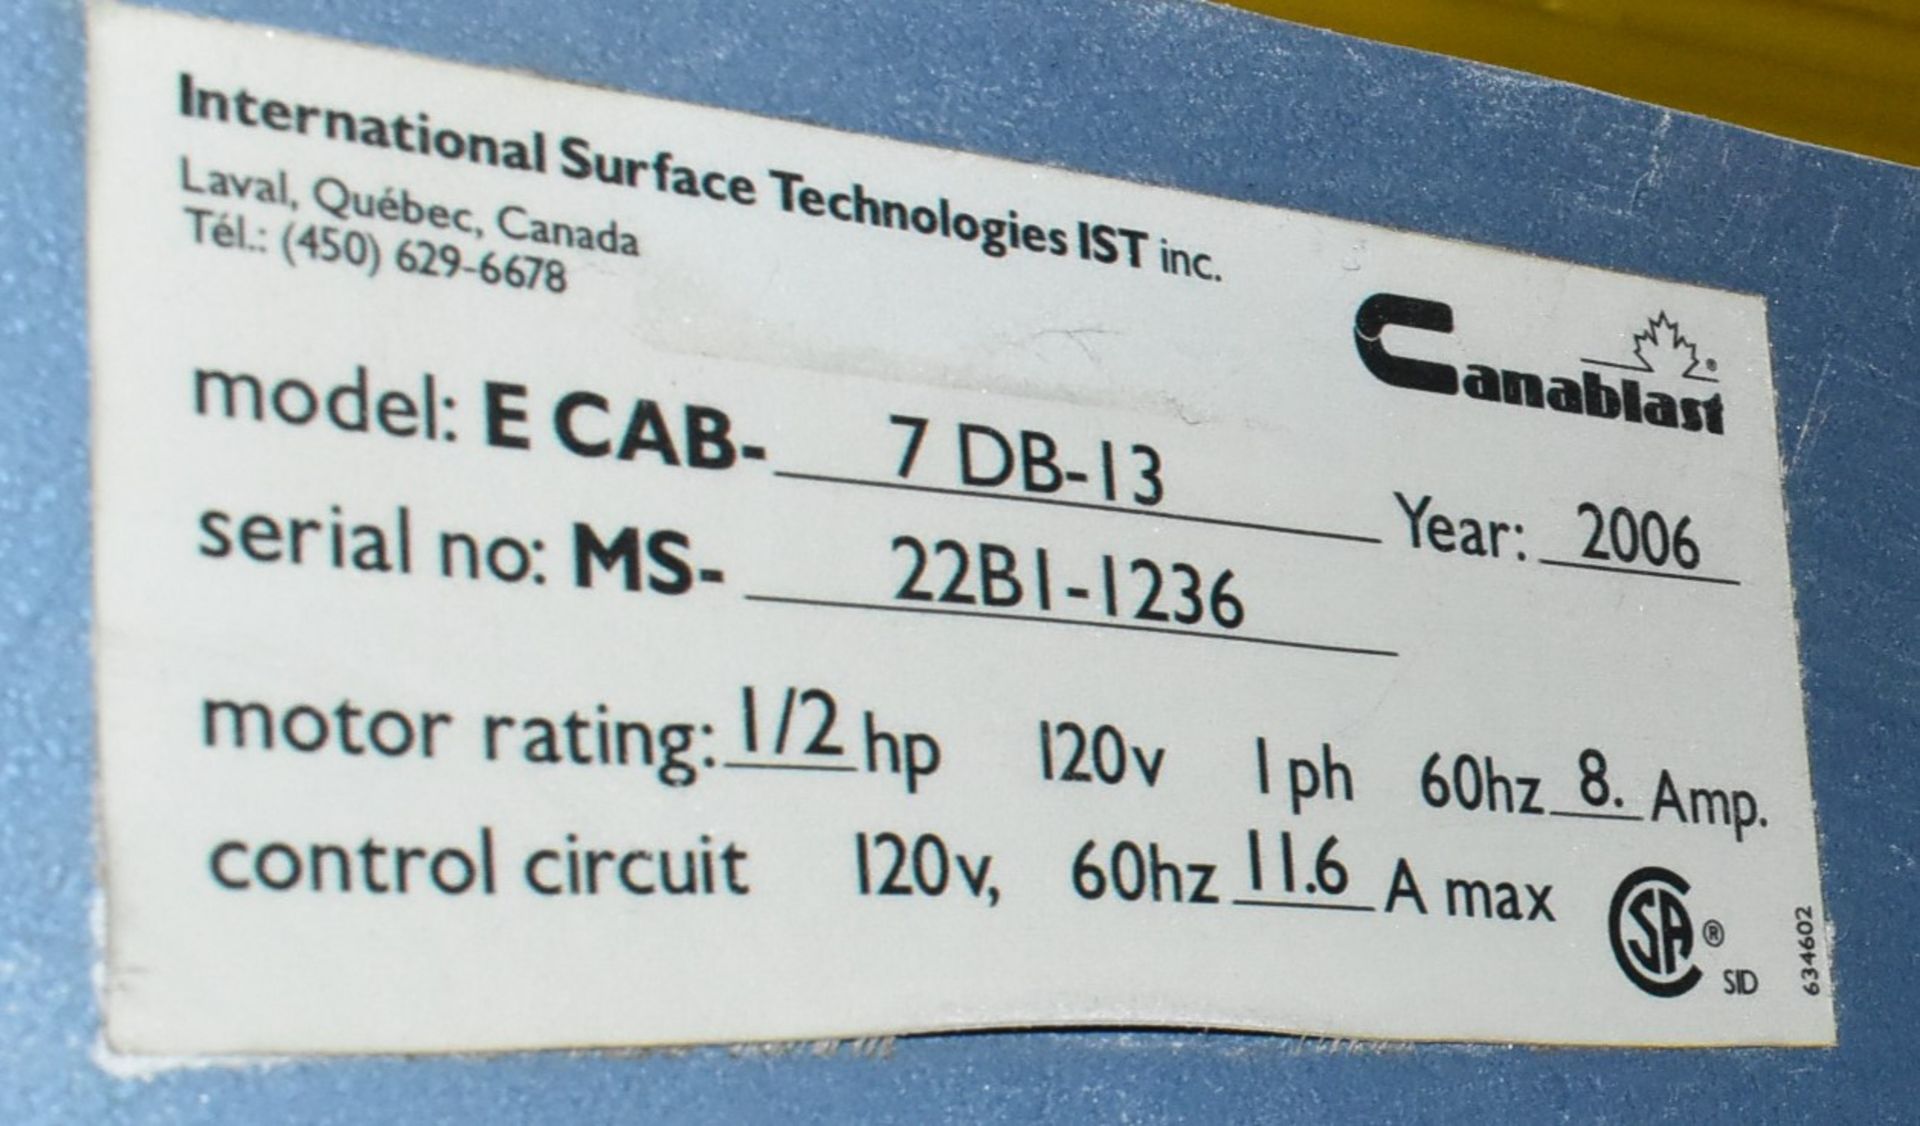 CANABLAST (2006) E CAB-7 DB-13 SANDBLAST CABINET WITH _ HP MOTOR, S/N MS-22B1-1236 (CI) [RIGGING - Image 4 of 5